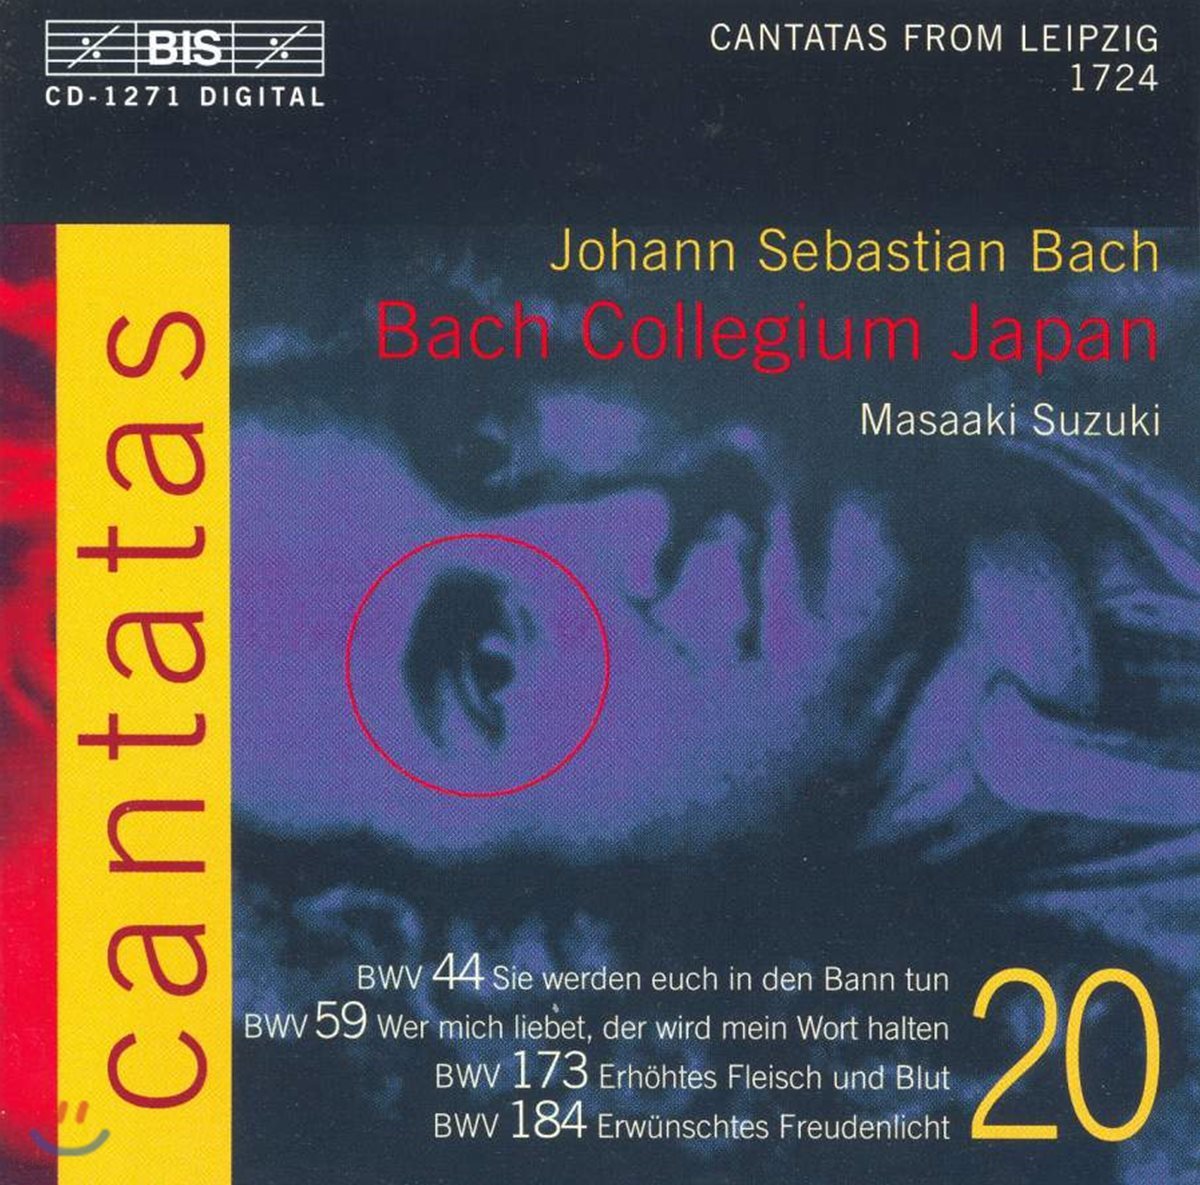 Yukari Nonoshita 바흐: 칸타타 20권 (Bach: Cantatas Vol. 20)